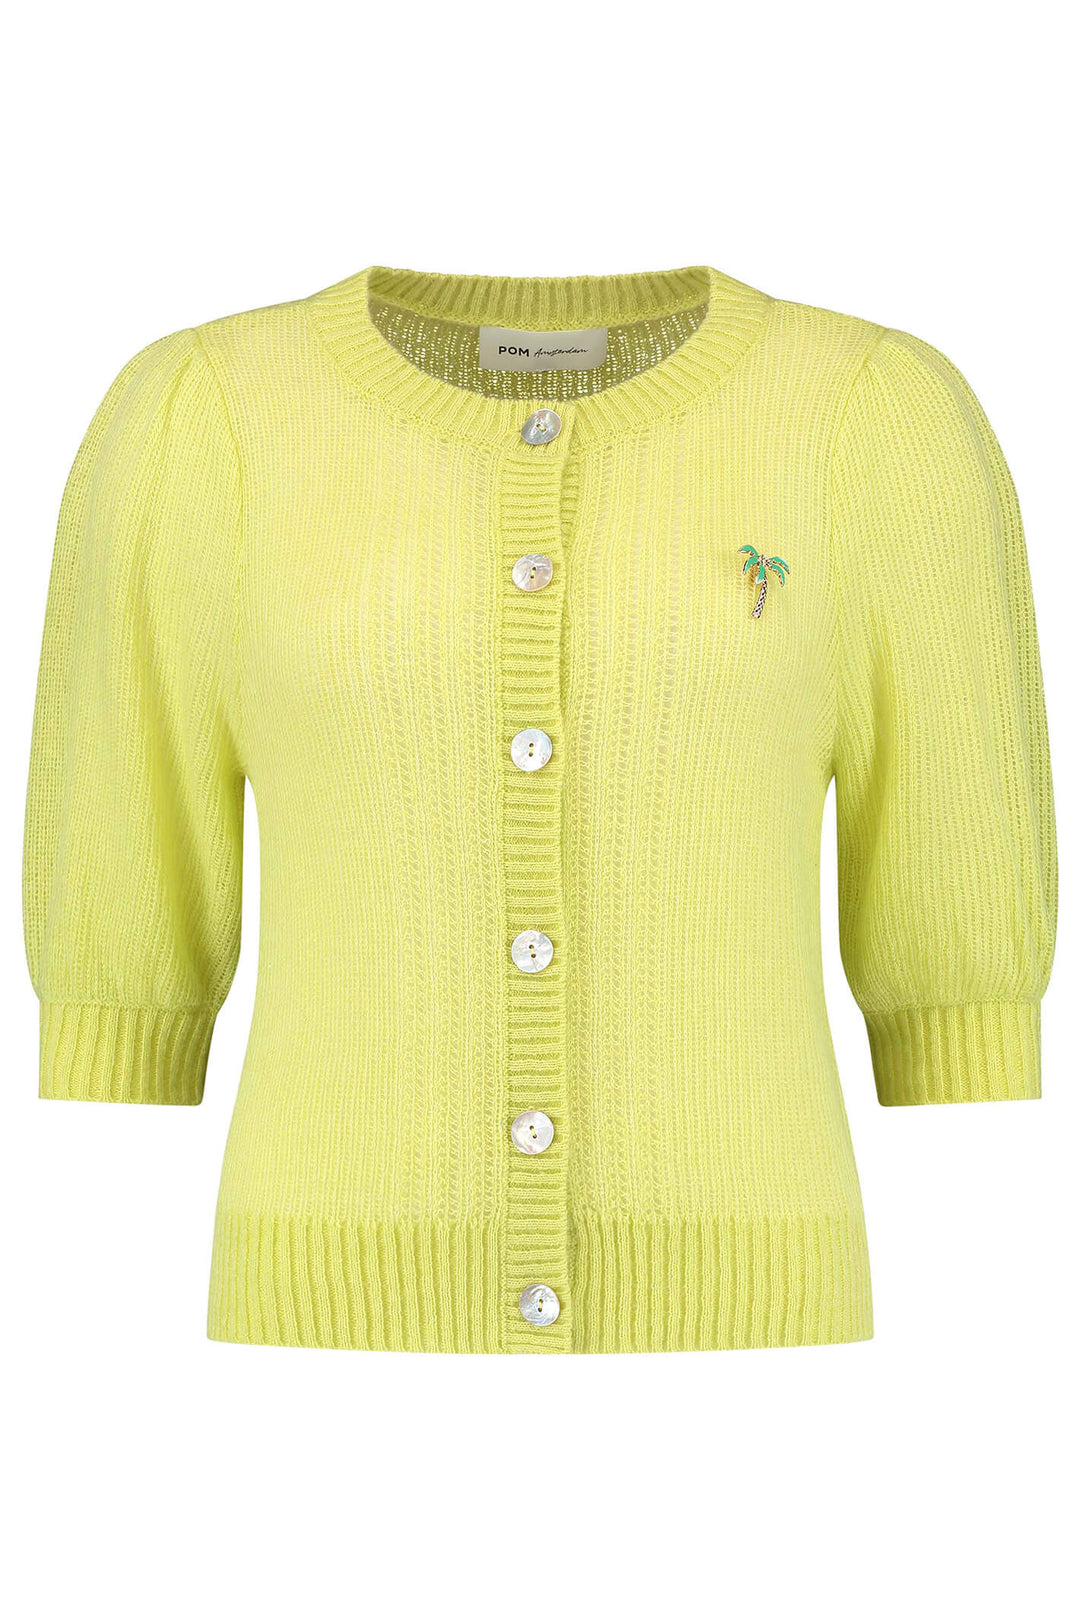 POM Amsterdam SP6869 Maud Luminous Lime Cardigan - Shirley Allum Boutique